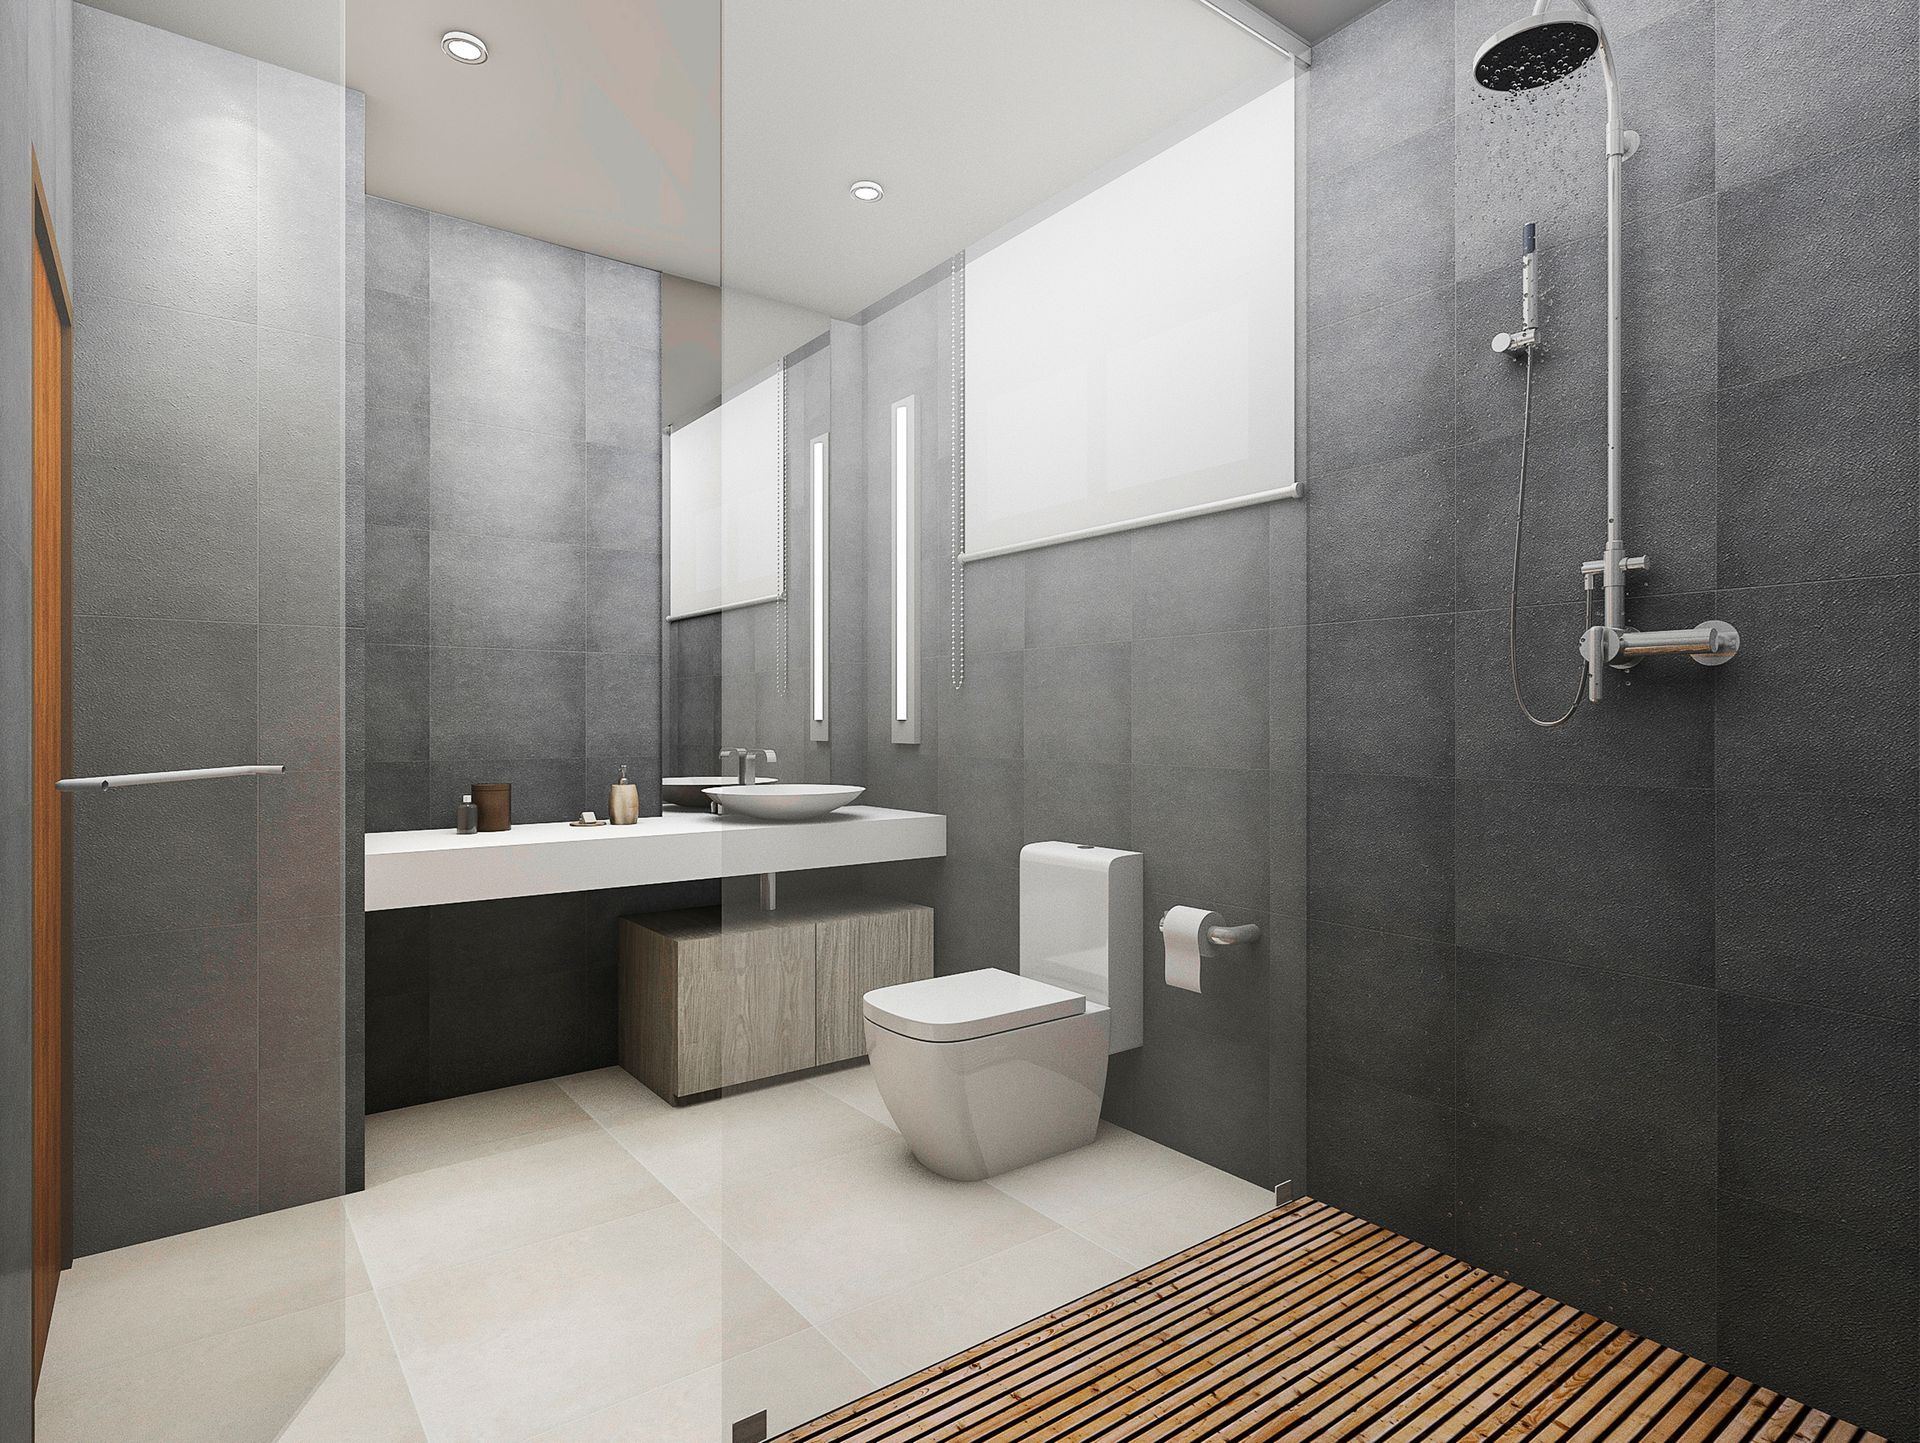 a bathroom interior design